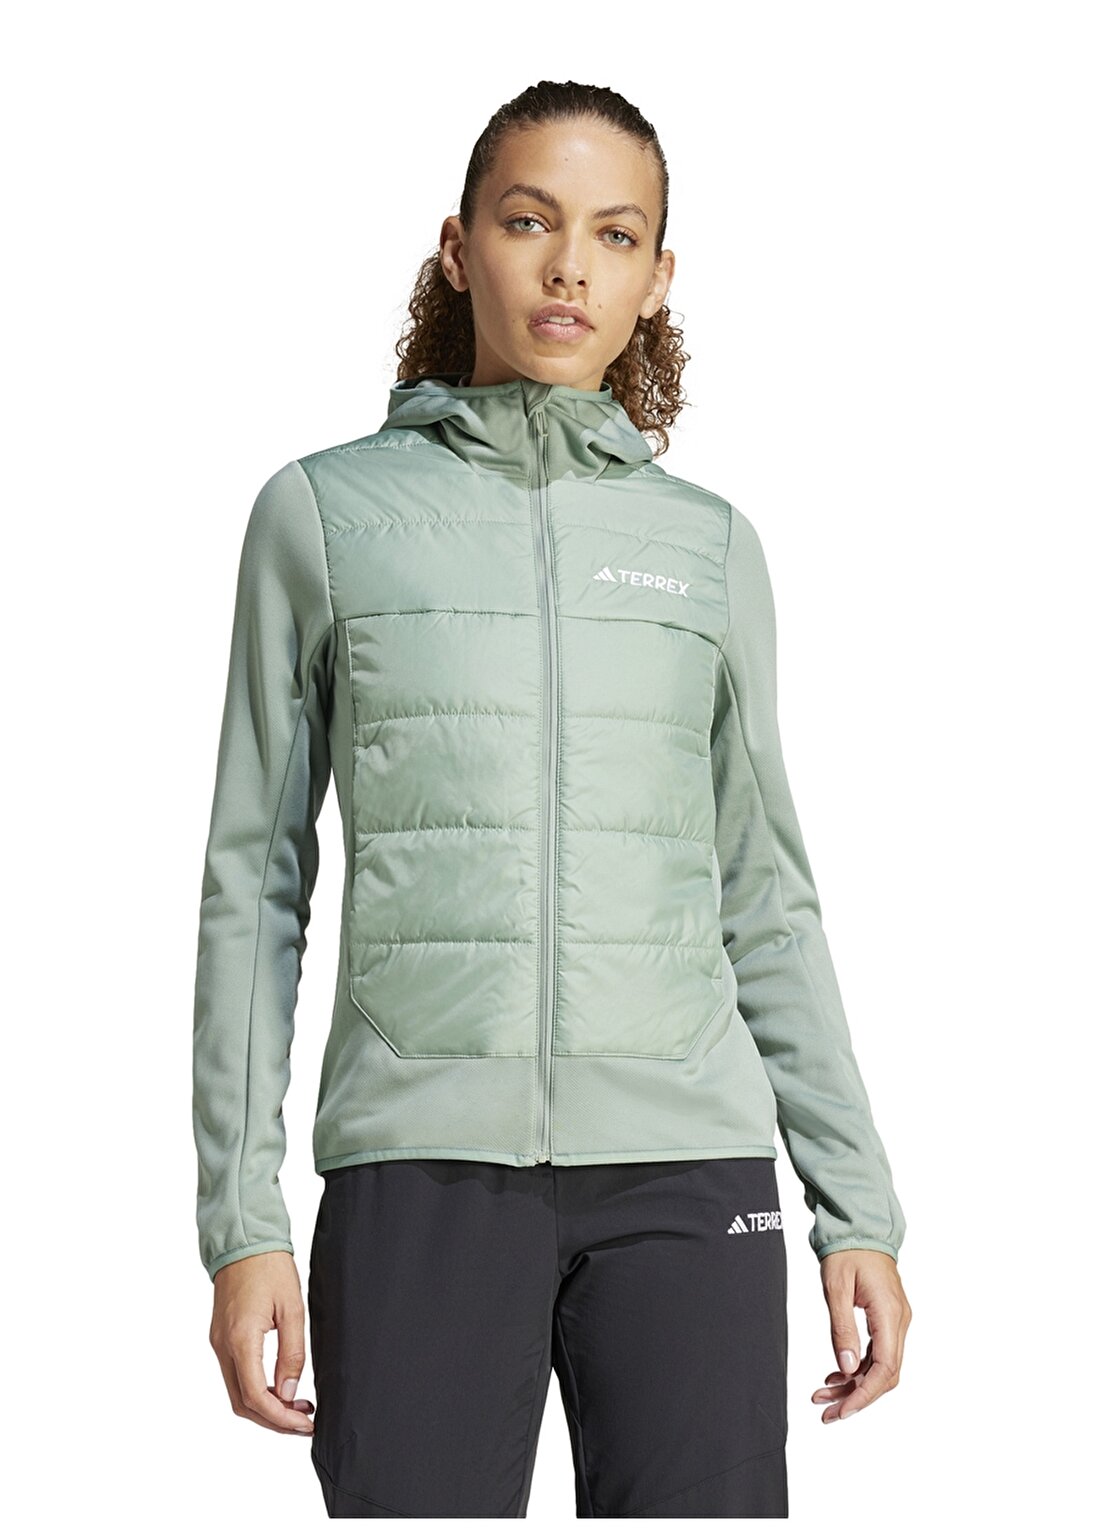 Adidas Yeşil Kadın Zip Ceket IM8105 W